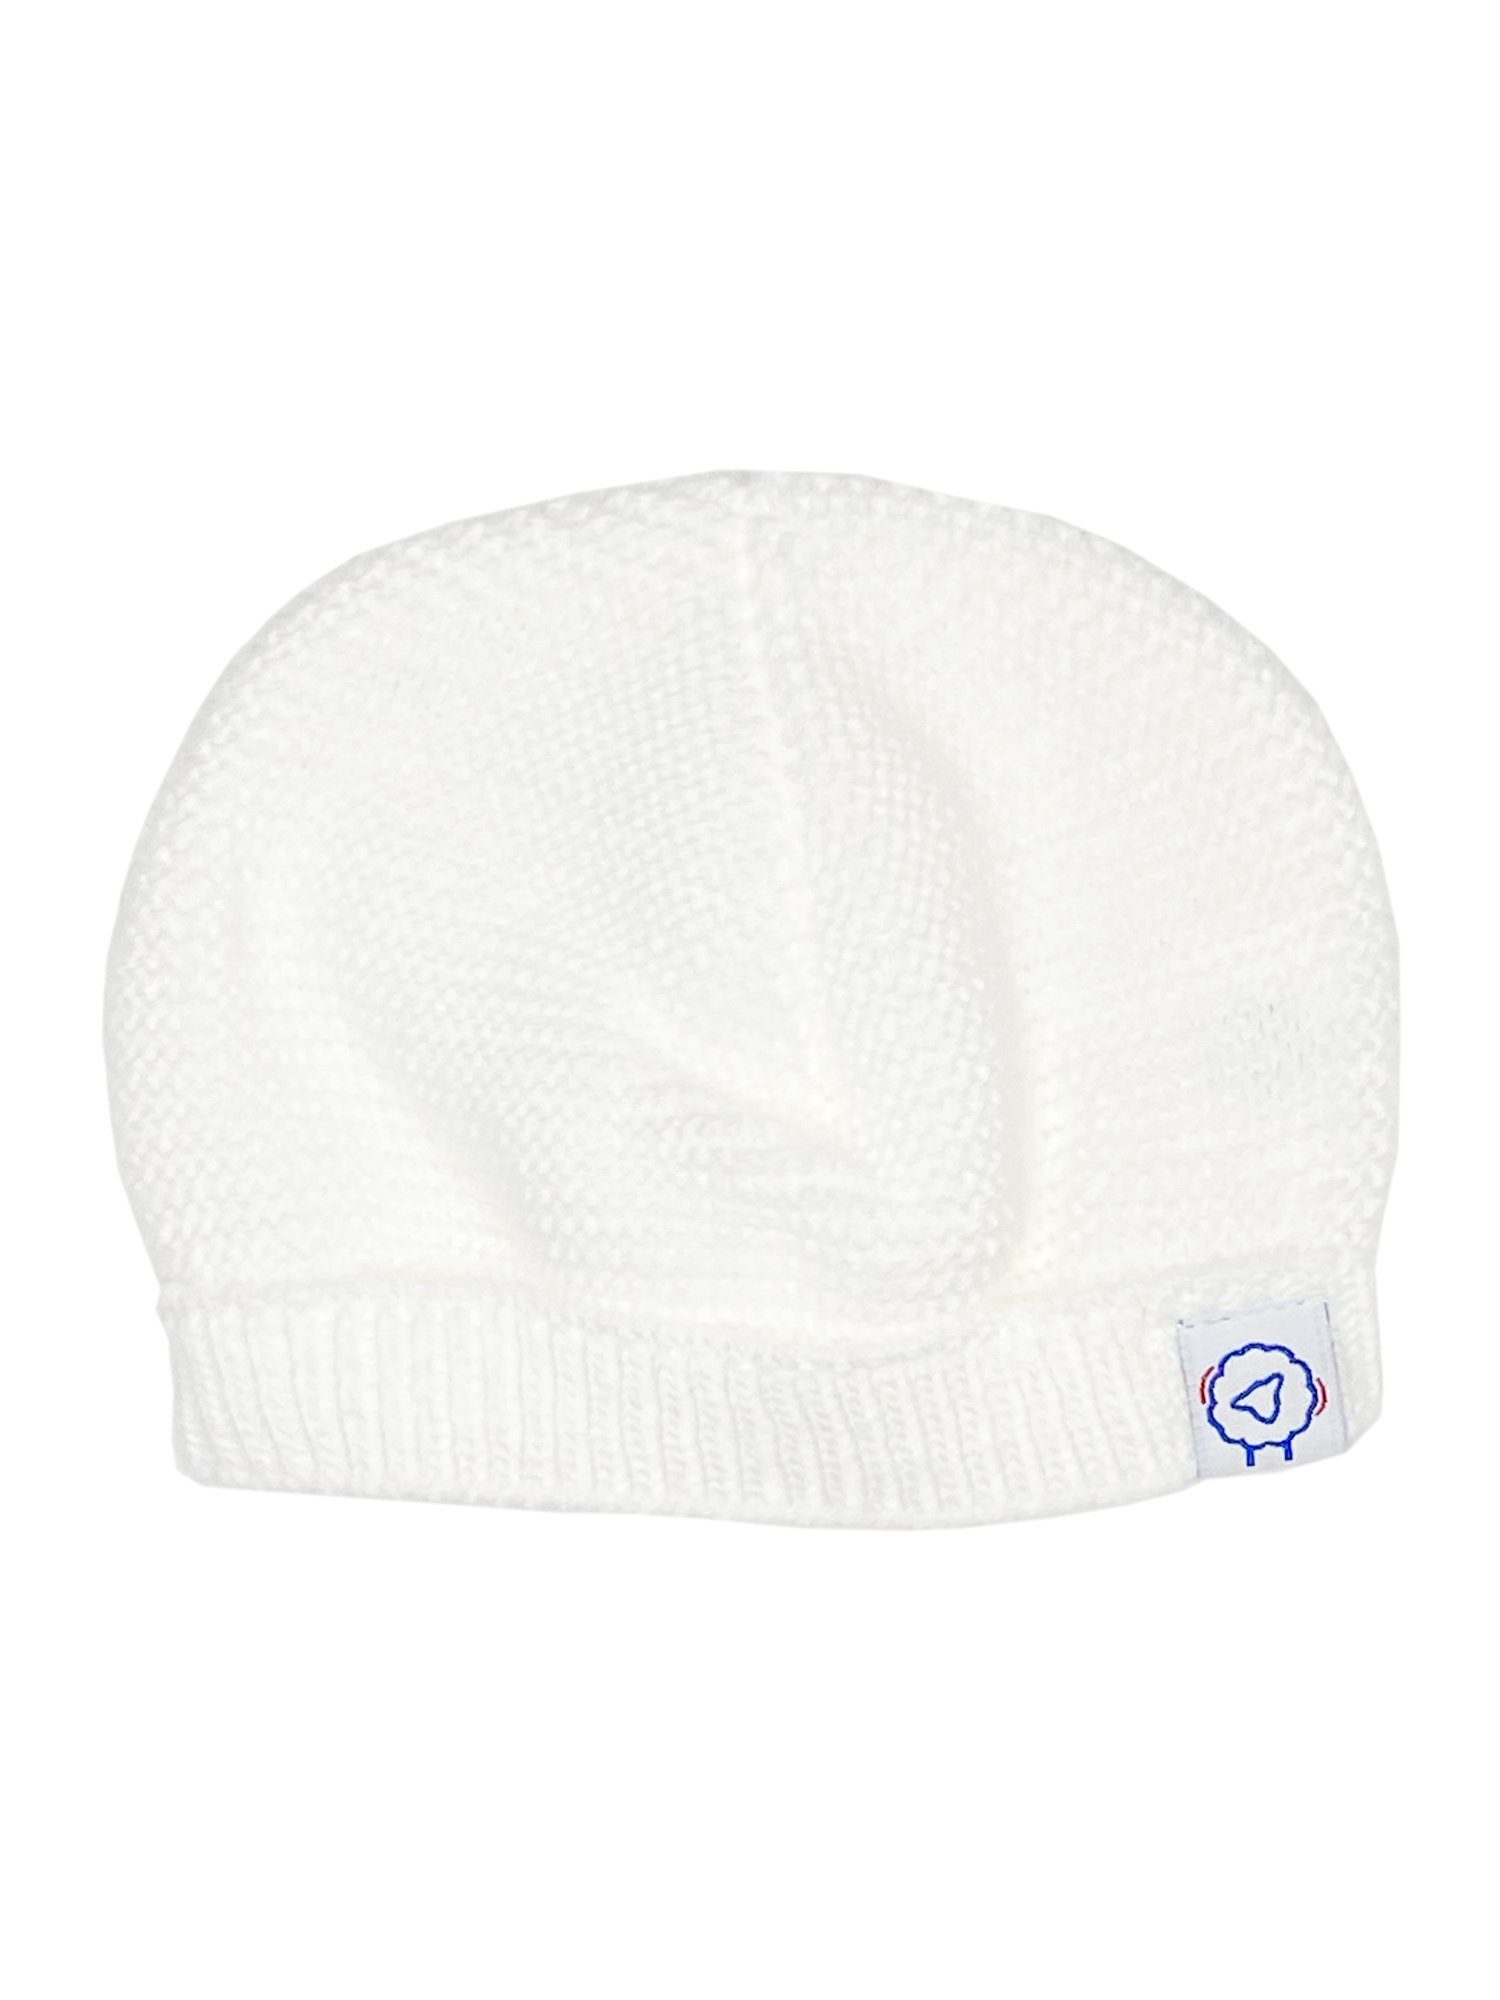 Knitted Hat - White Hat La Manufacture de Layette 